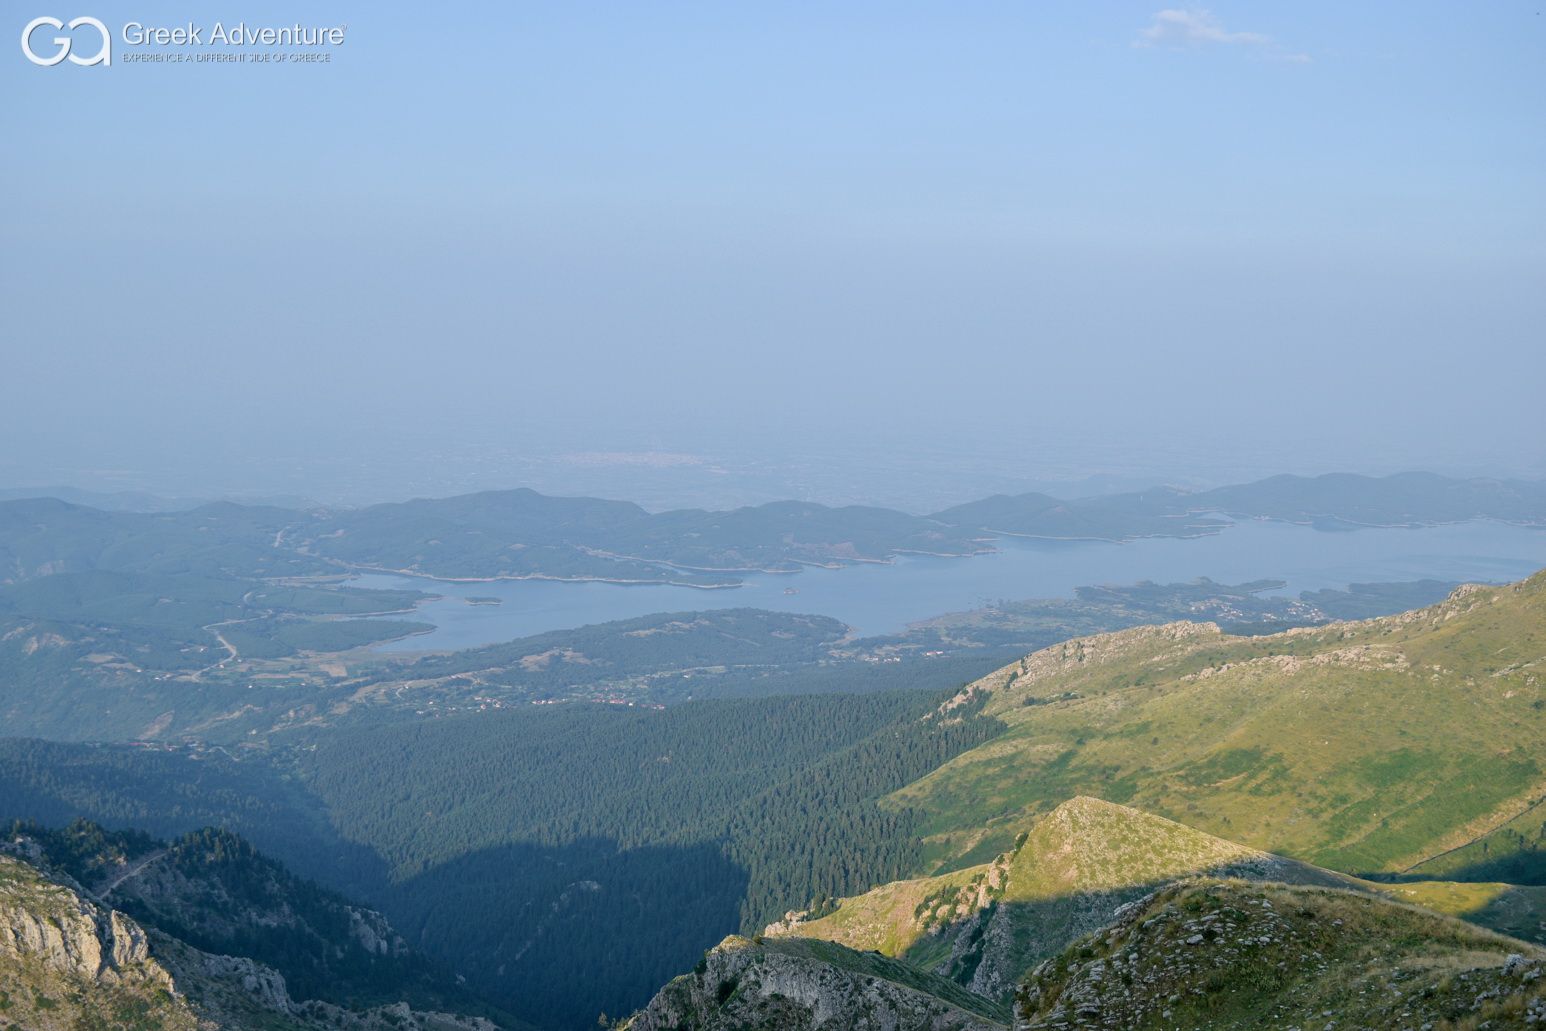 wp-content/uploads/kazarma_peak_greece_gps_offroad_greek_mountains_agrafa9.jpg